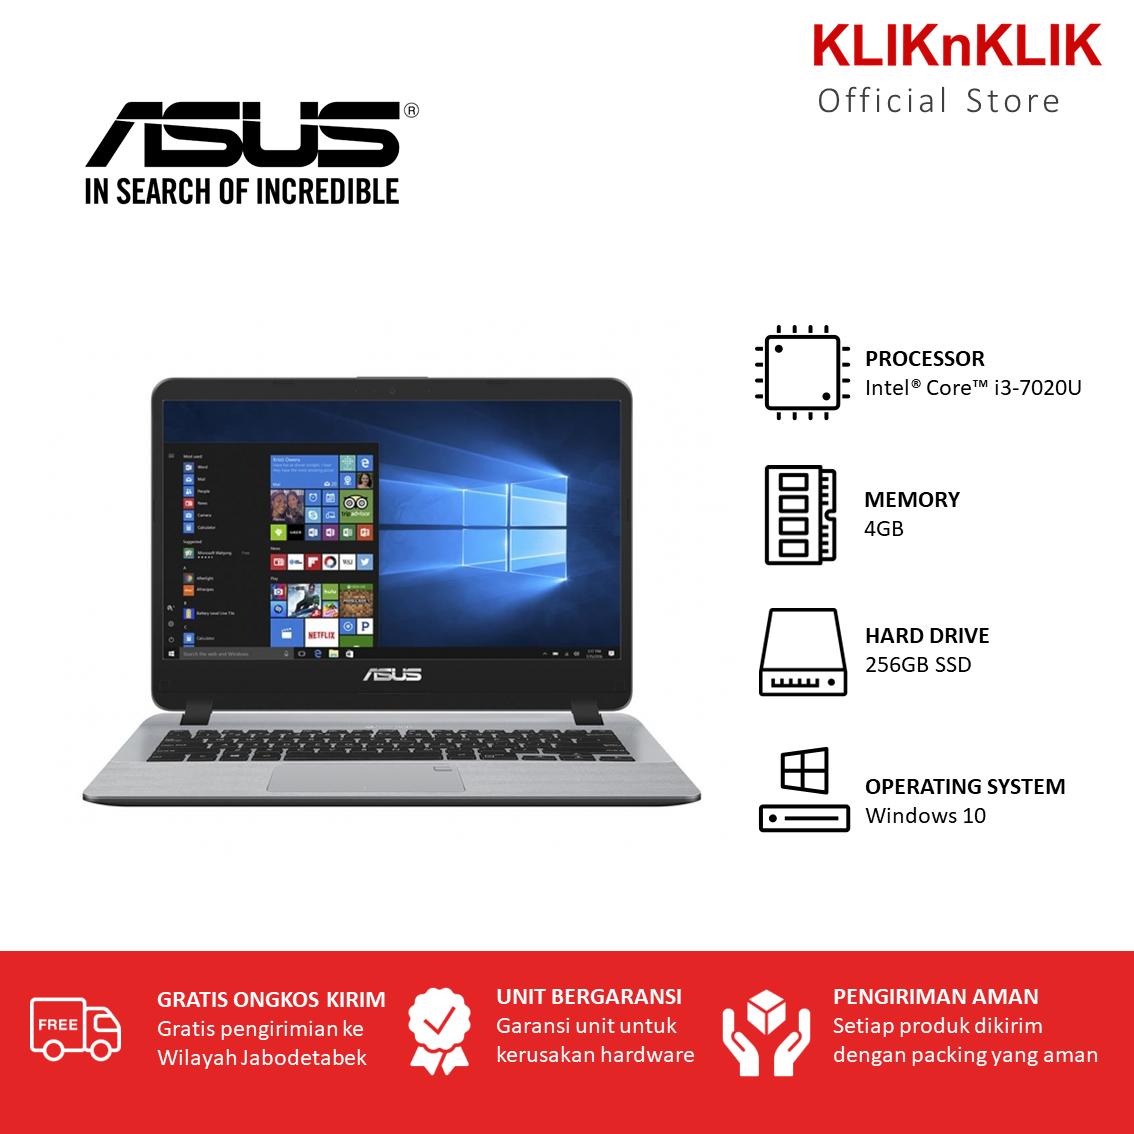 ASUS A407UA-BV319T - RAM 4GB - Intel i3-7020U - SSD 256GB - 14 Inch - Windows 10 - Grey - Laptop Murah